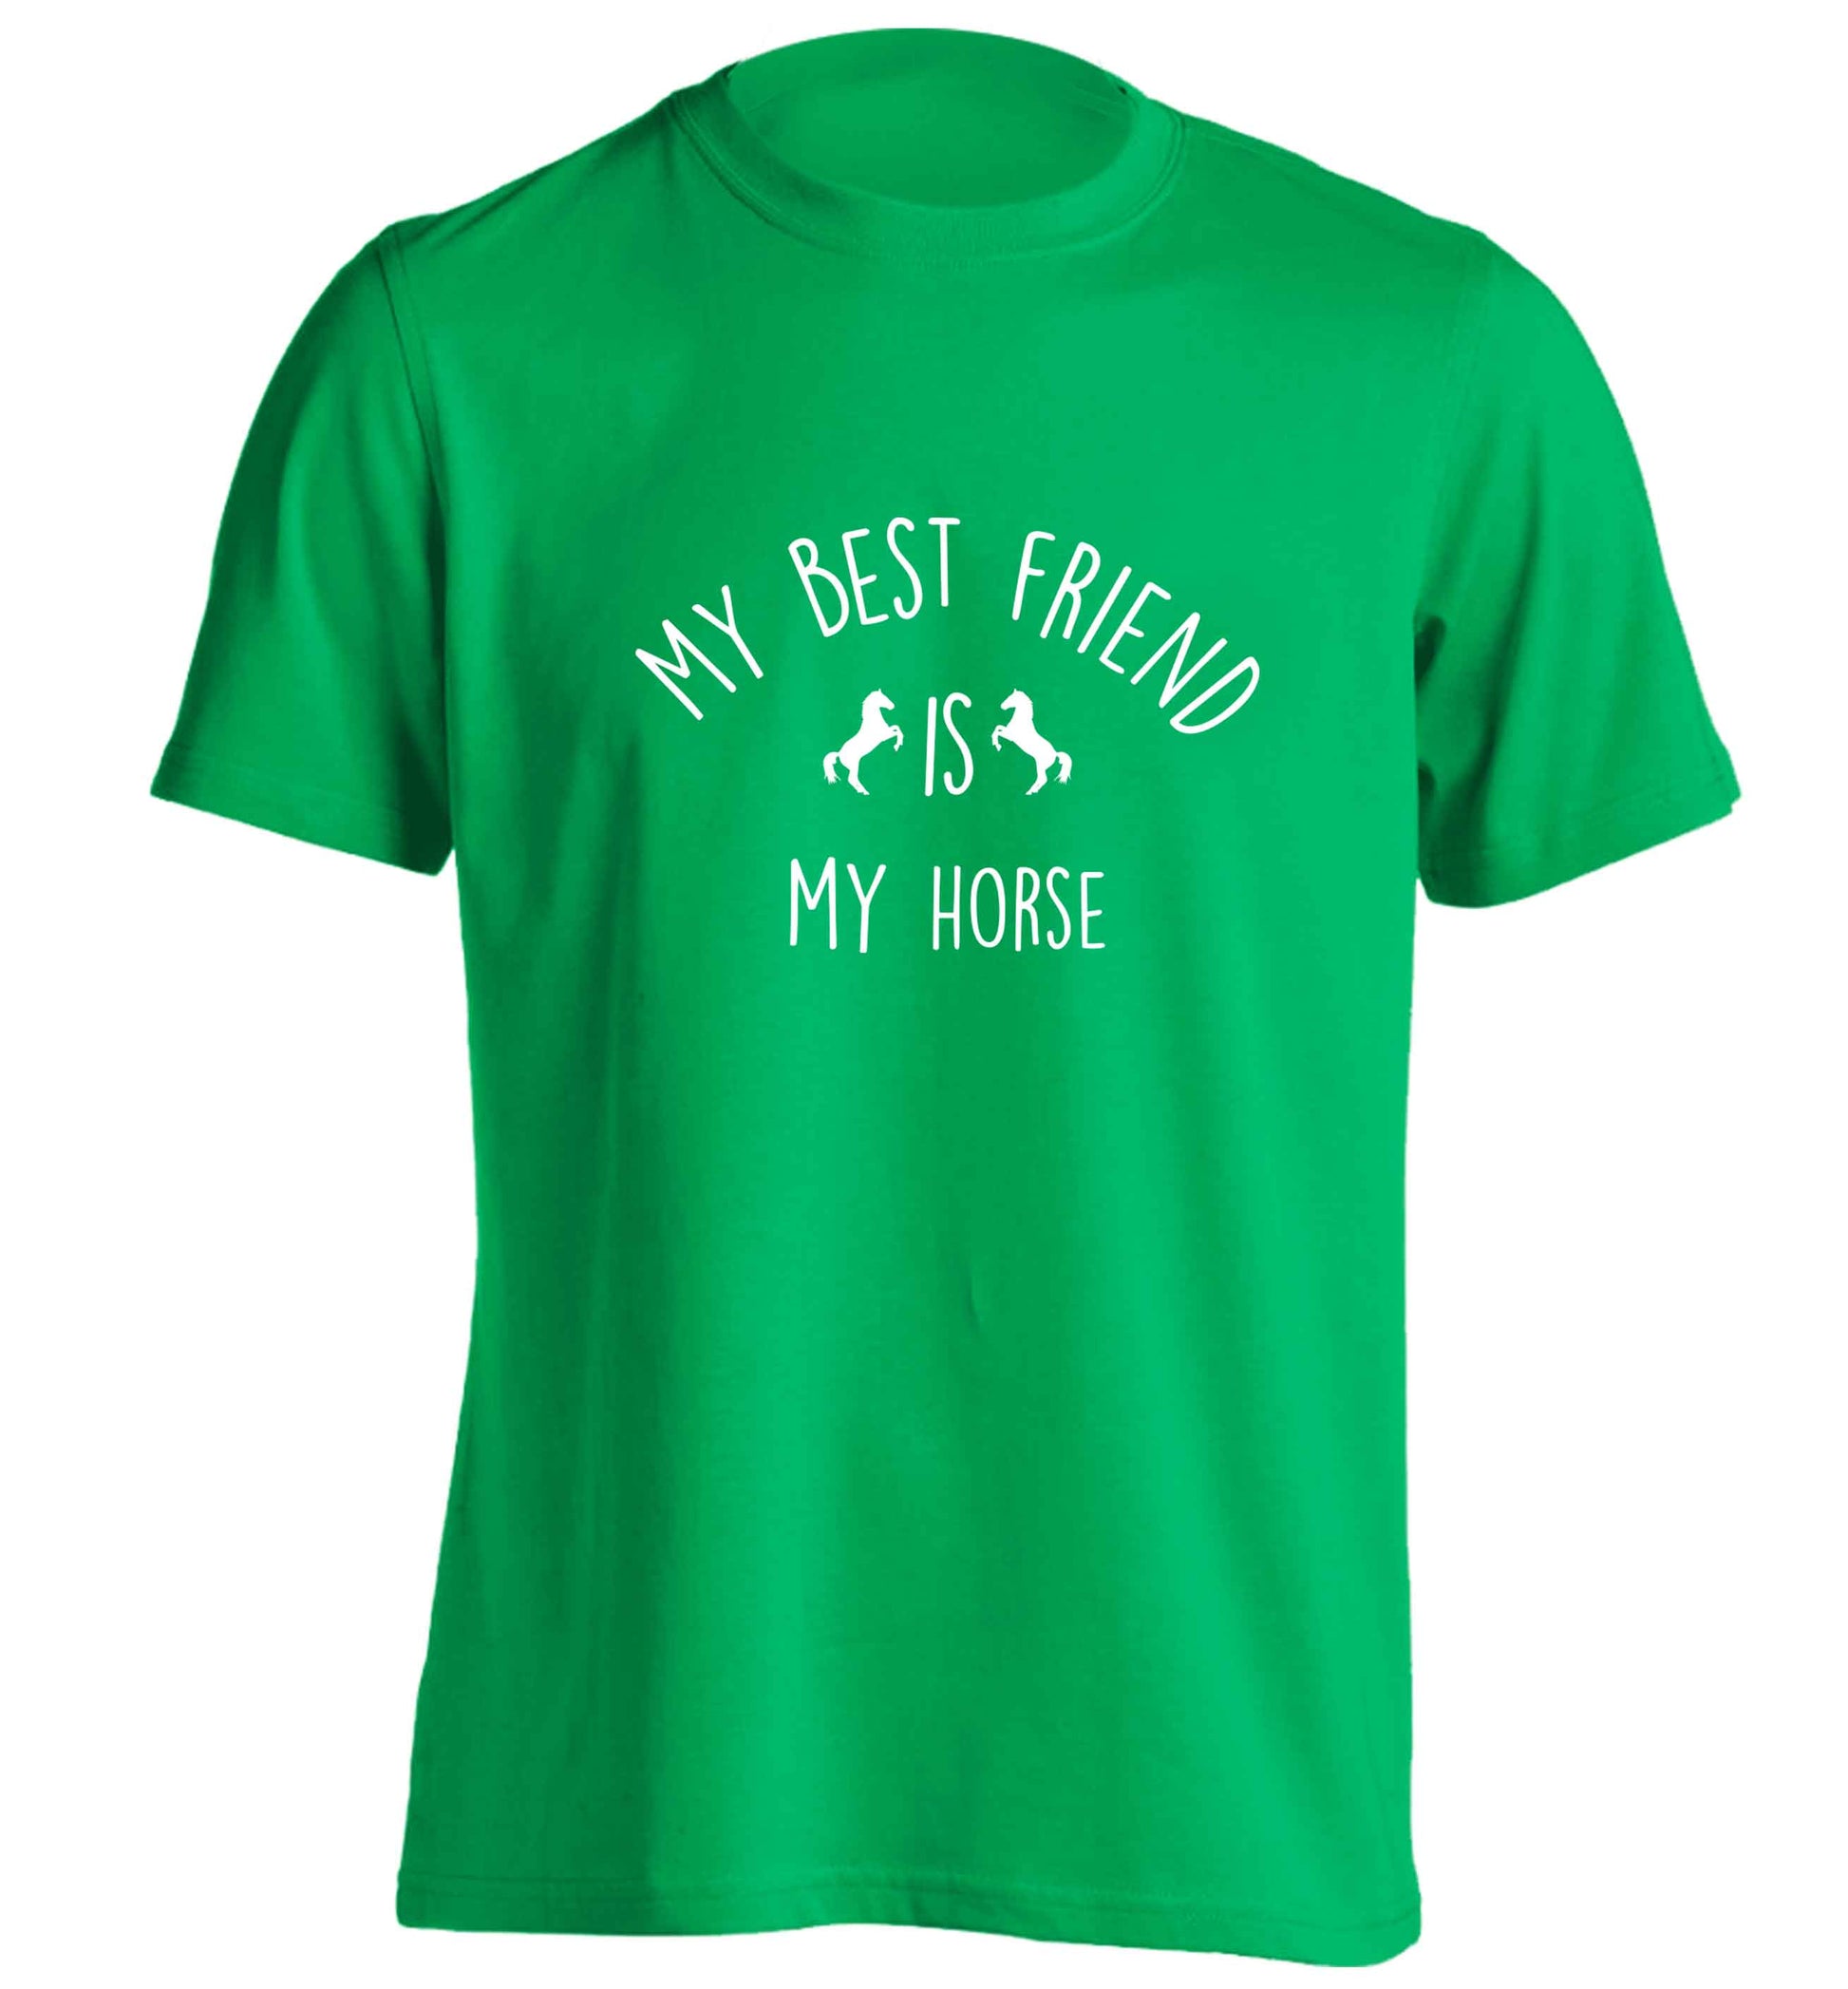 My best friend is my horse adults unisex green Tshirt 2XL